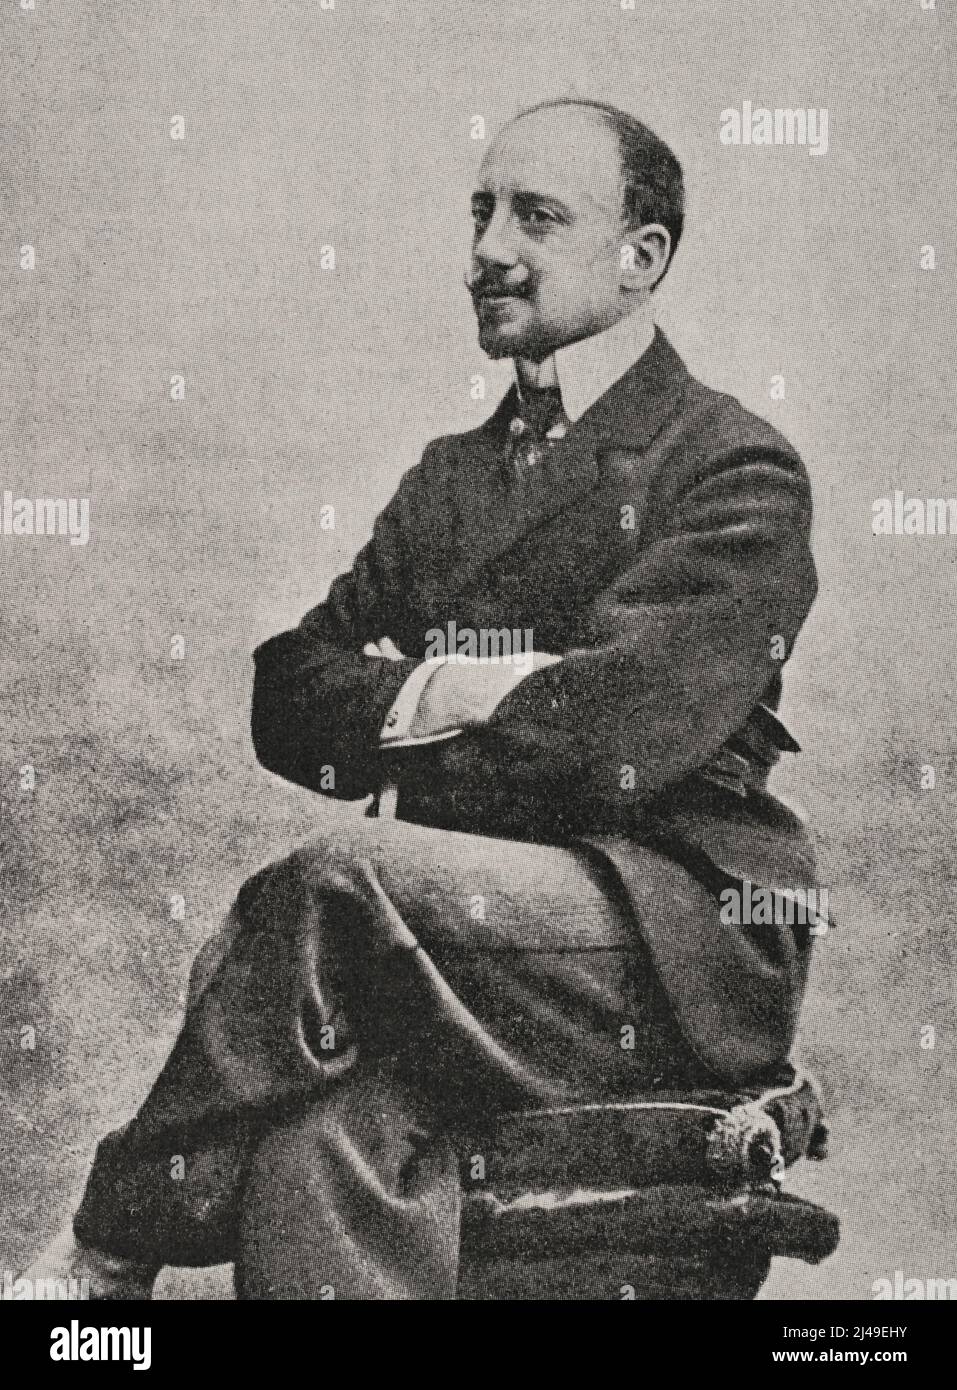 Gabriele D'Annunzio (1863-1938). Prince of Montenevoso. Italian poet and political leader. Portrait. Photoengraving. La Ilustración Española y Americana, 1898. Stock Photo